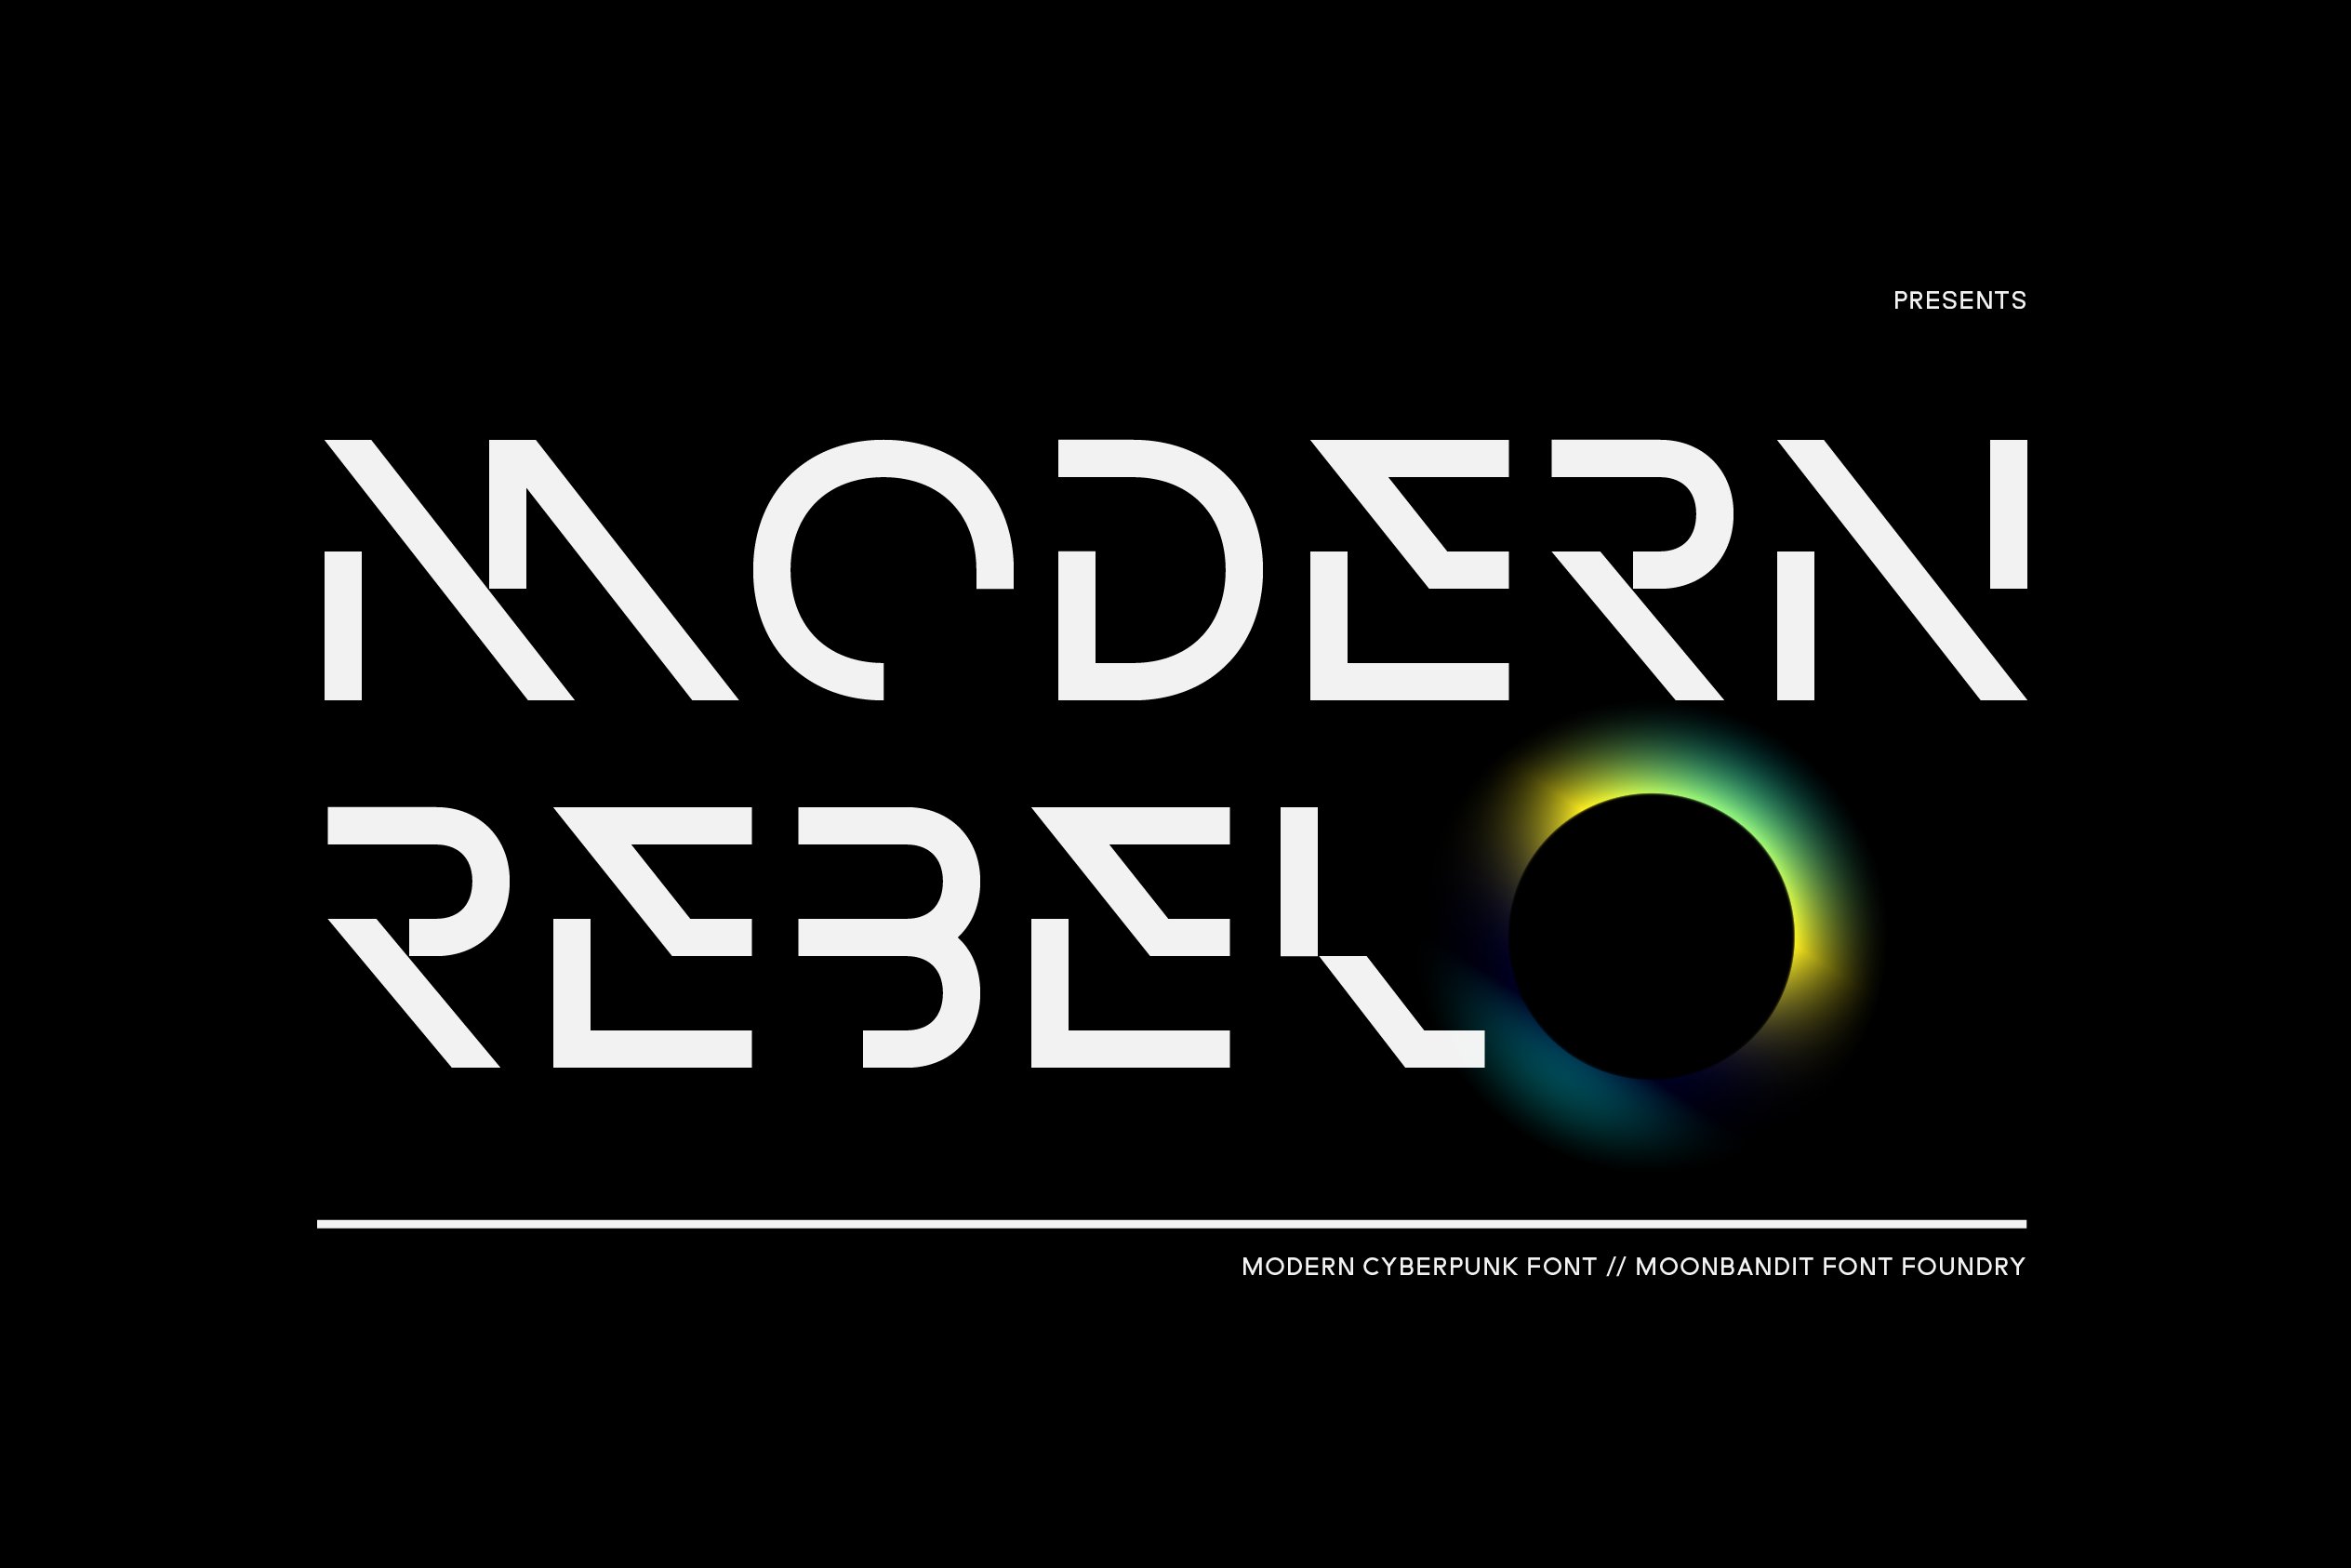 MBF Modern Rebel - Cyberpunk font cover image.